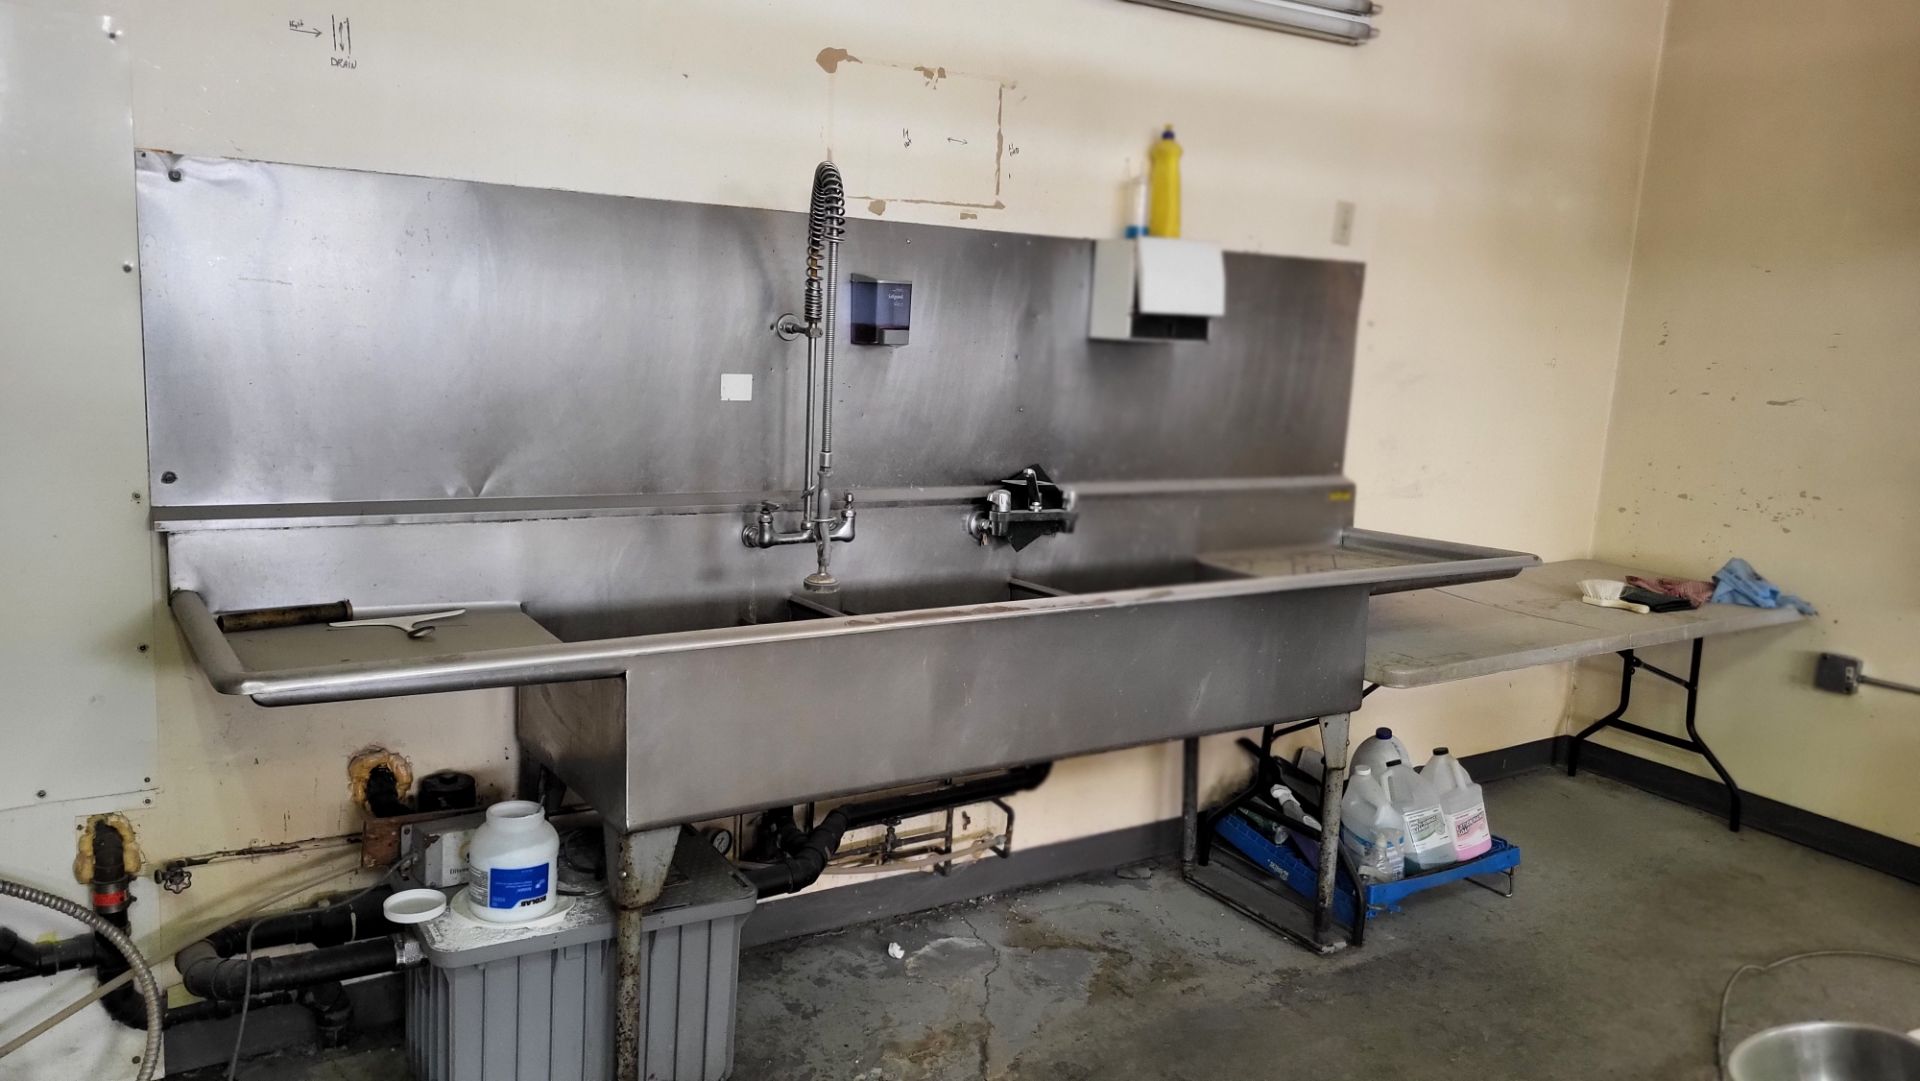 Lot of assorted cafeteria equipment: Fryer, Gaz range, stainless steel sink, etc - Image 4 of 5